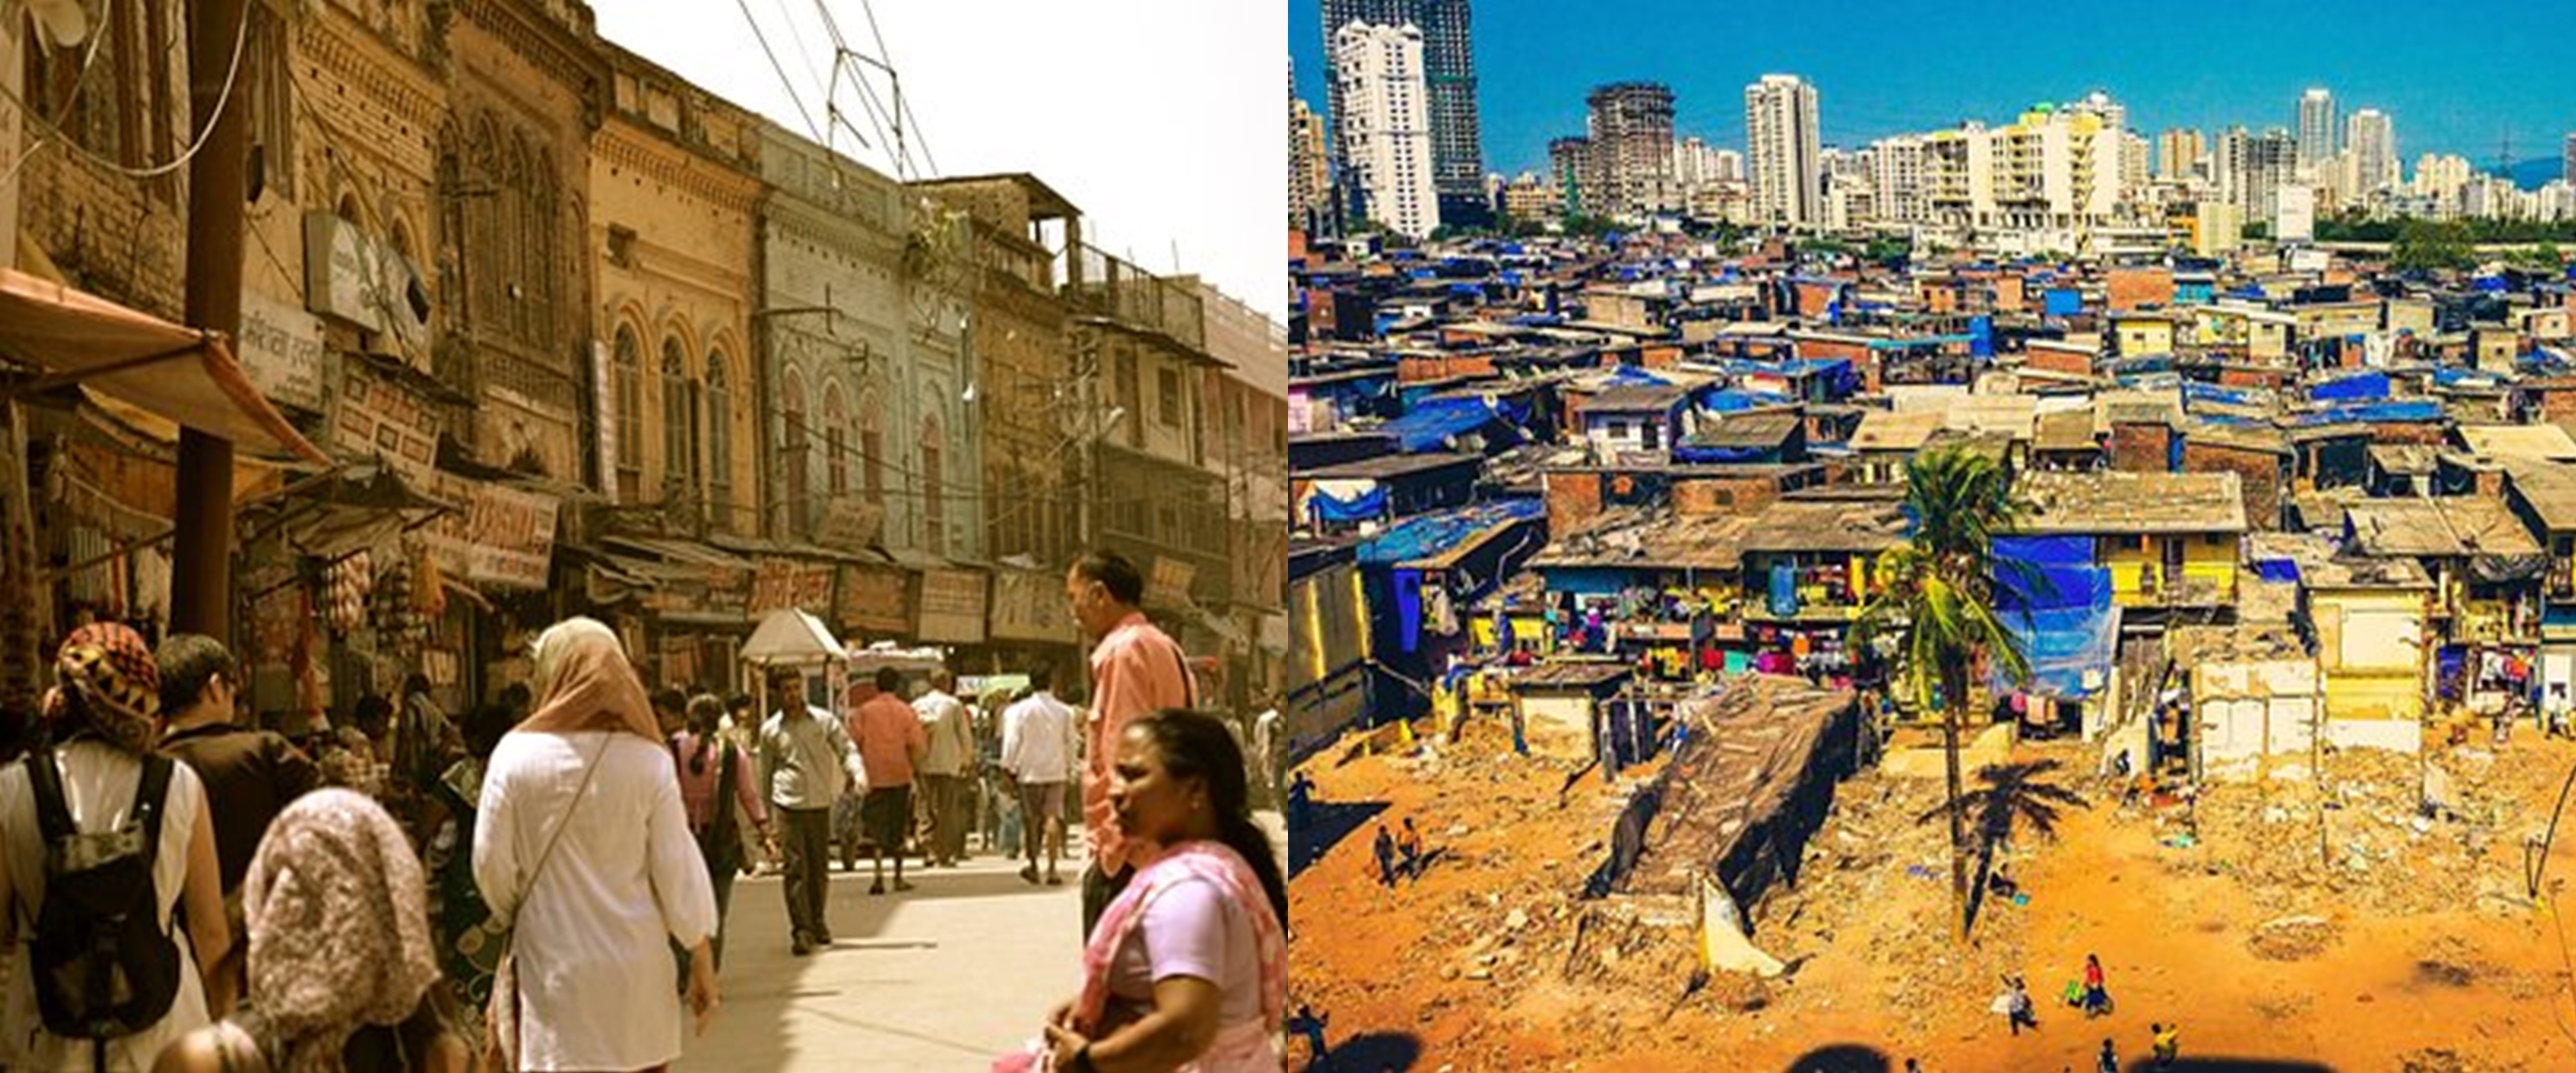 Termasuk padat penduduk, ini 5 alasan mengapa India menyandang julukan negara paling kotor di dunia